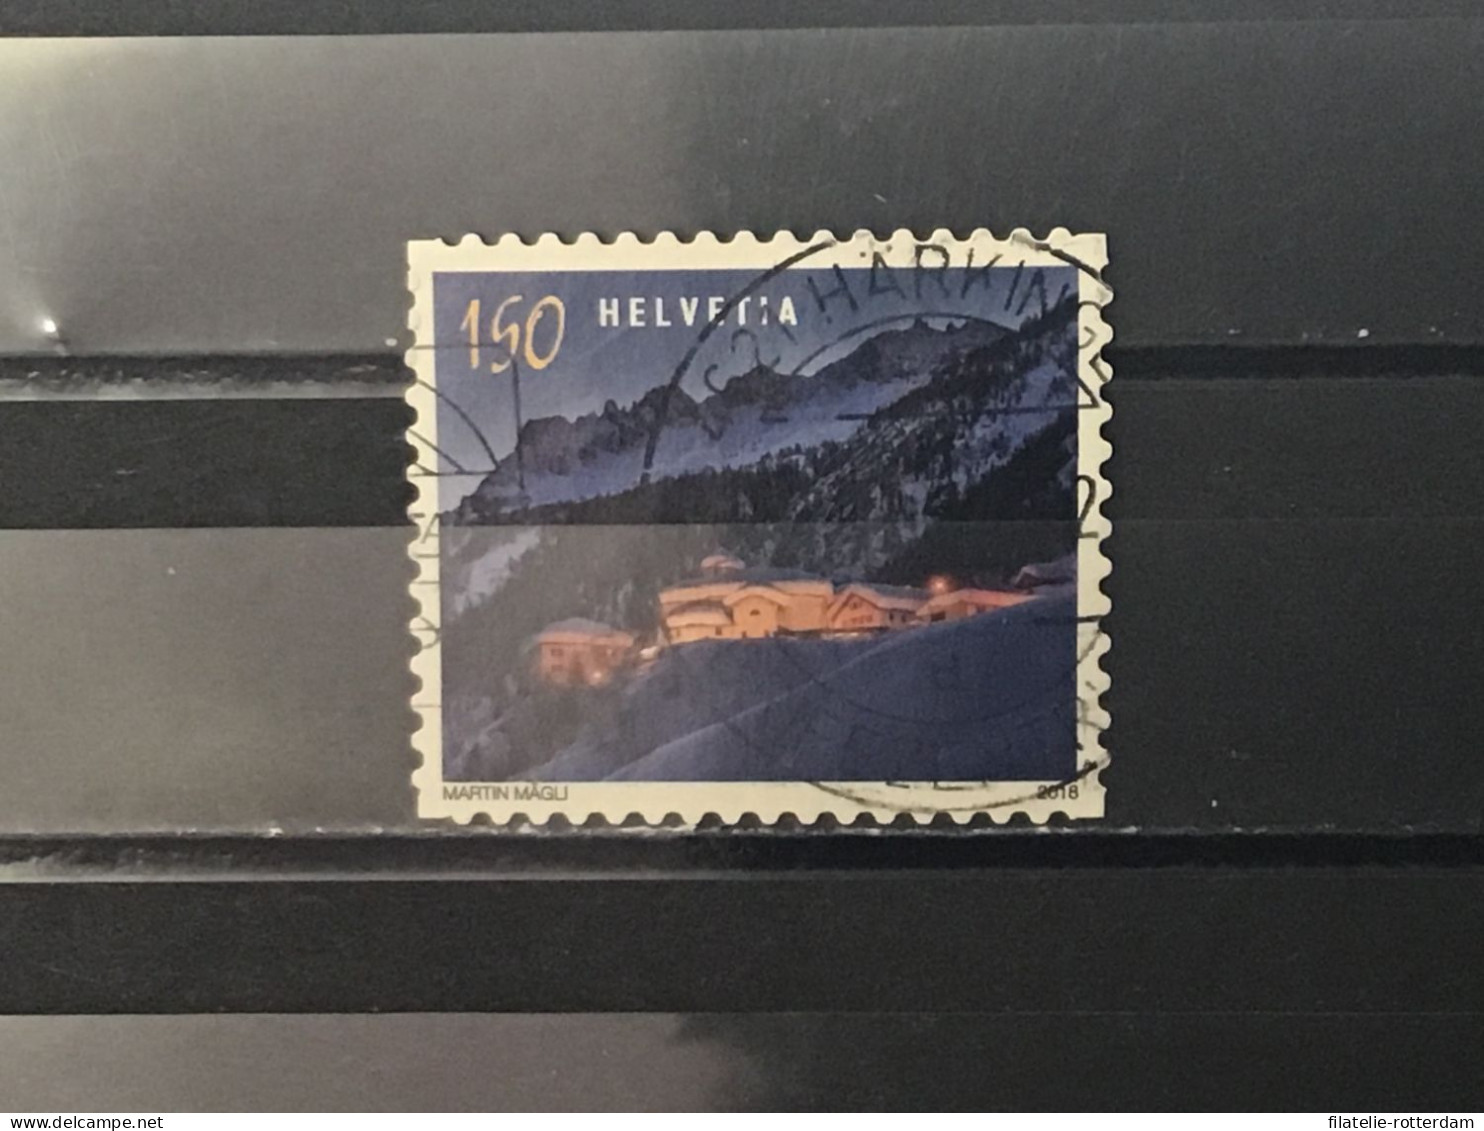 Switzerland / Zwitserland - Christmas (150) 2018 - Used Stamps